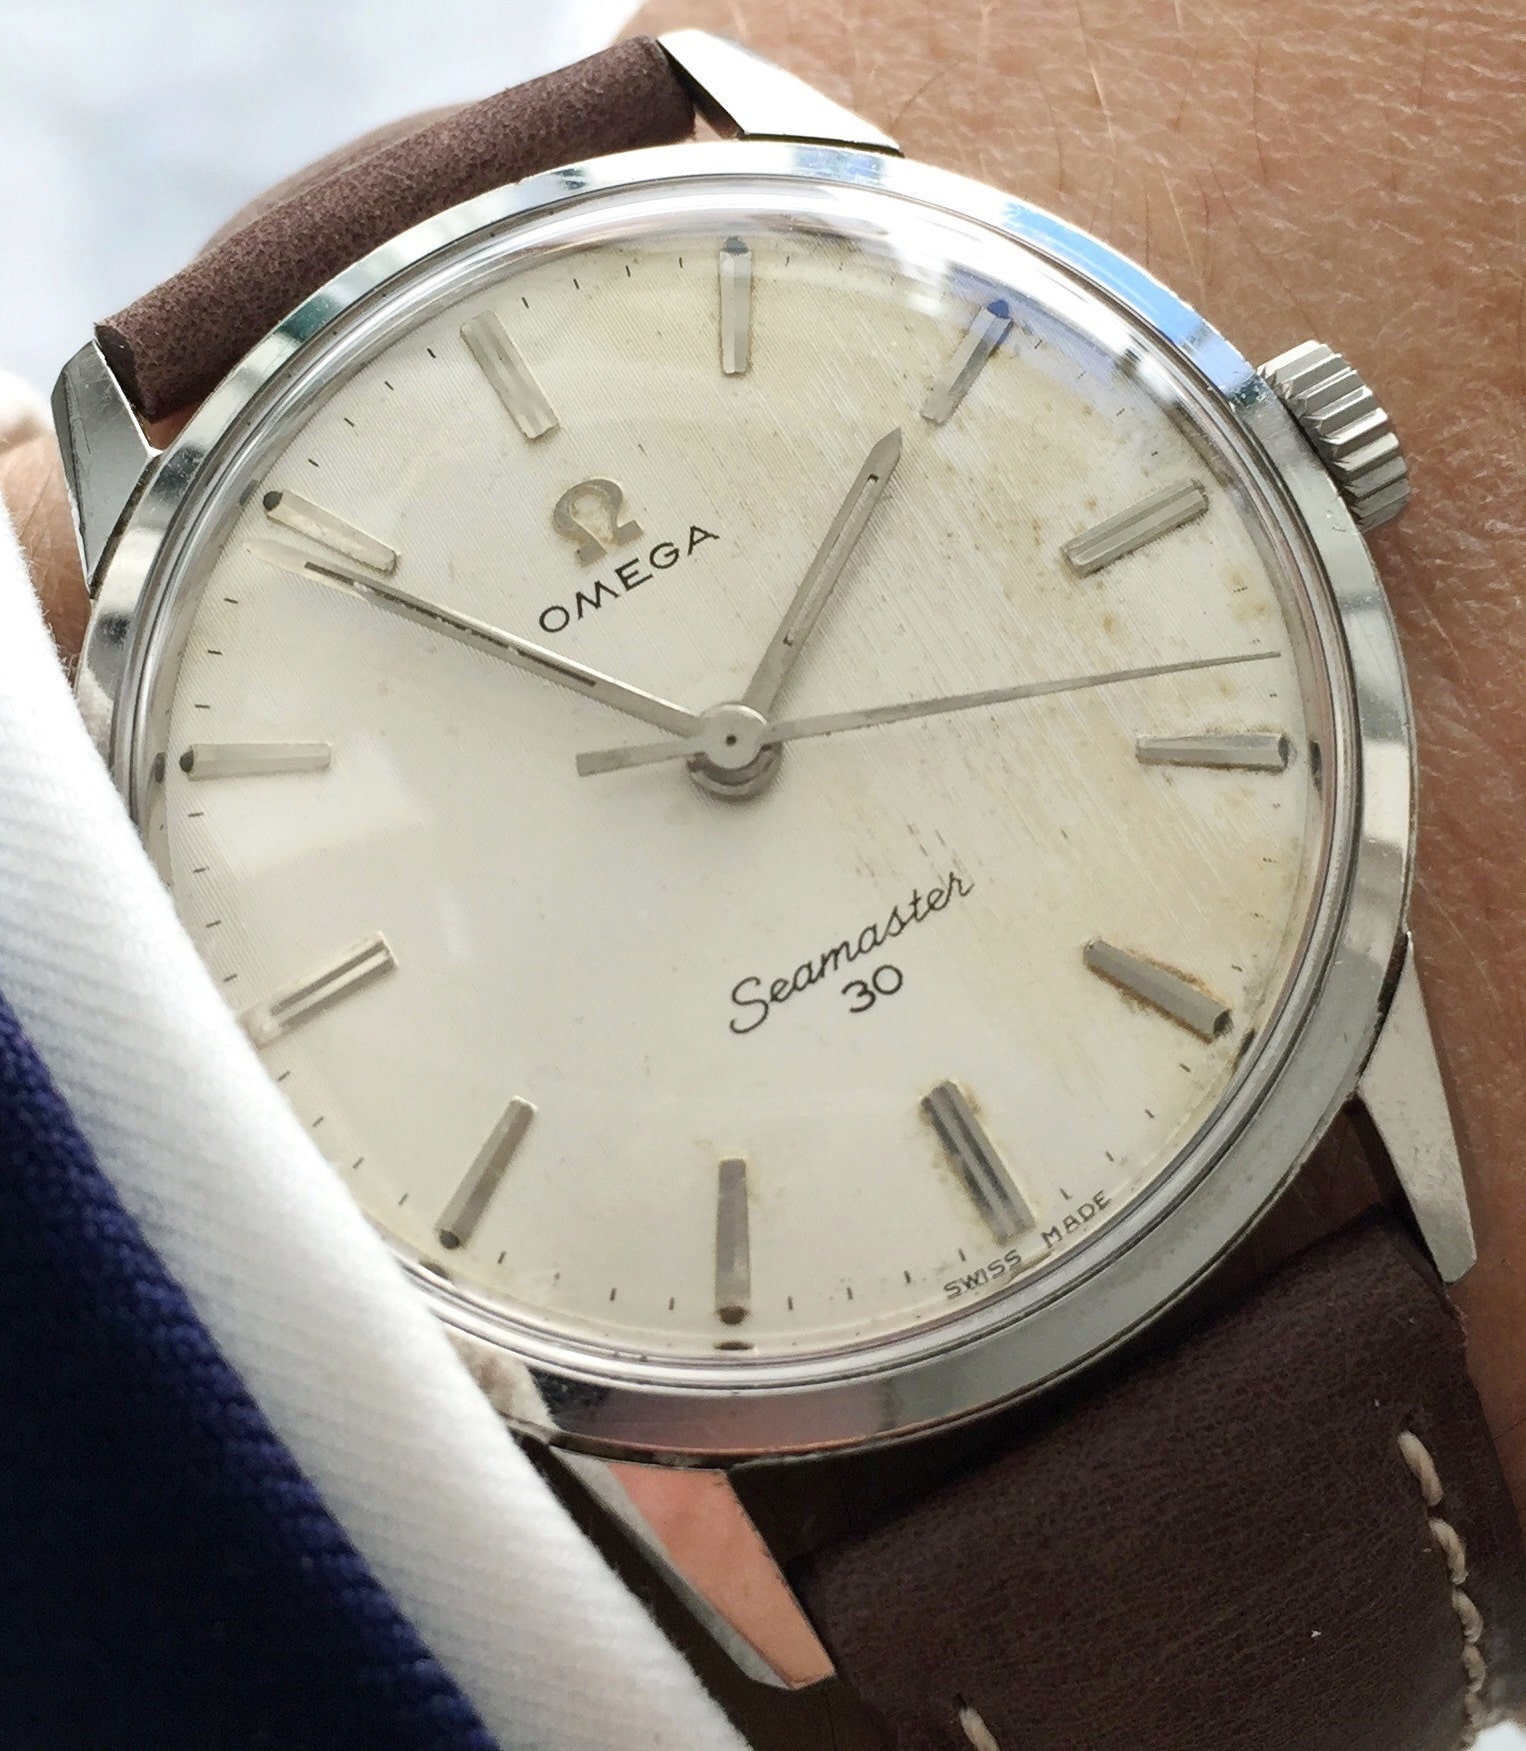 vintage omega seamaster watch